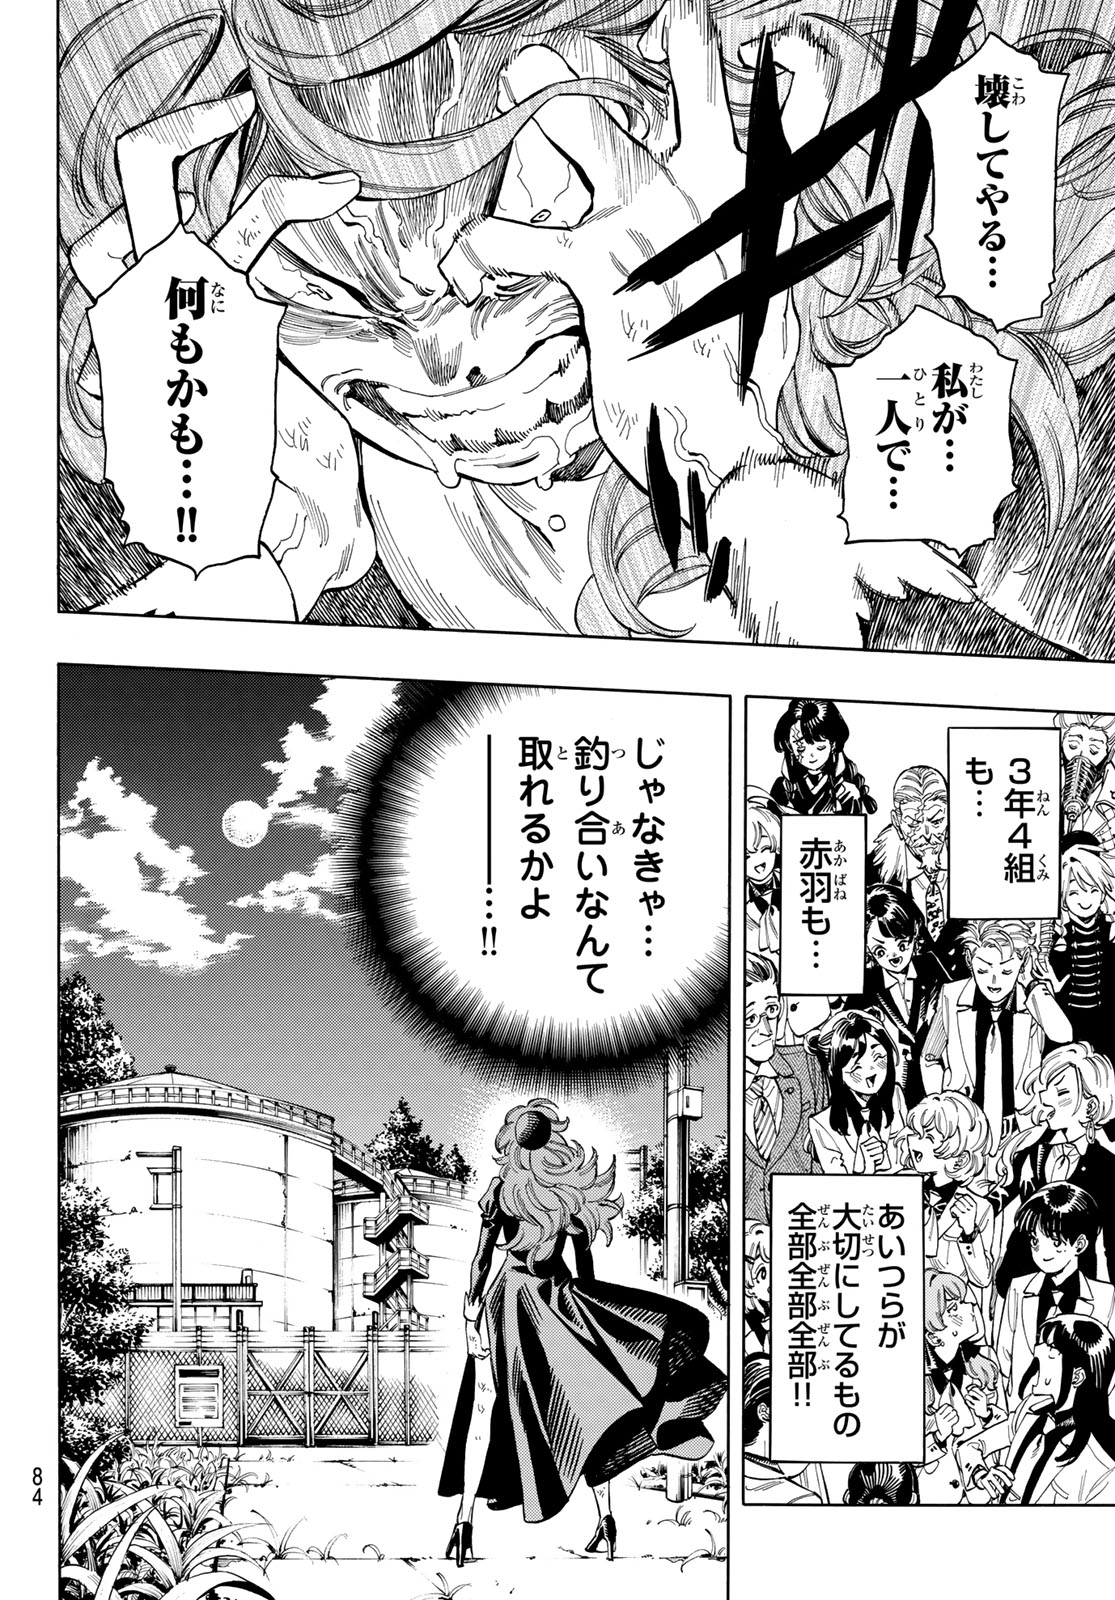 Akabane Honeko no Bodyguard - Chapter 83 - Page 4